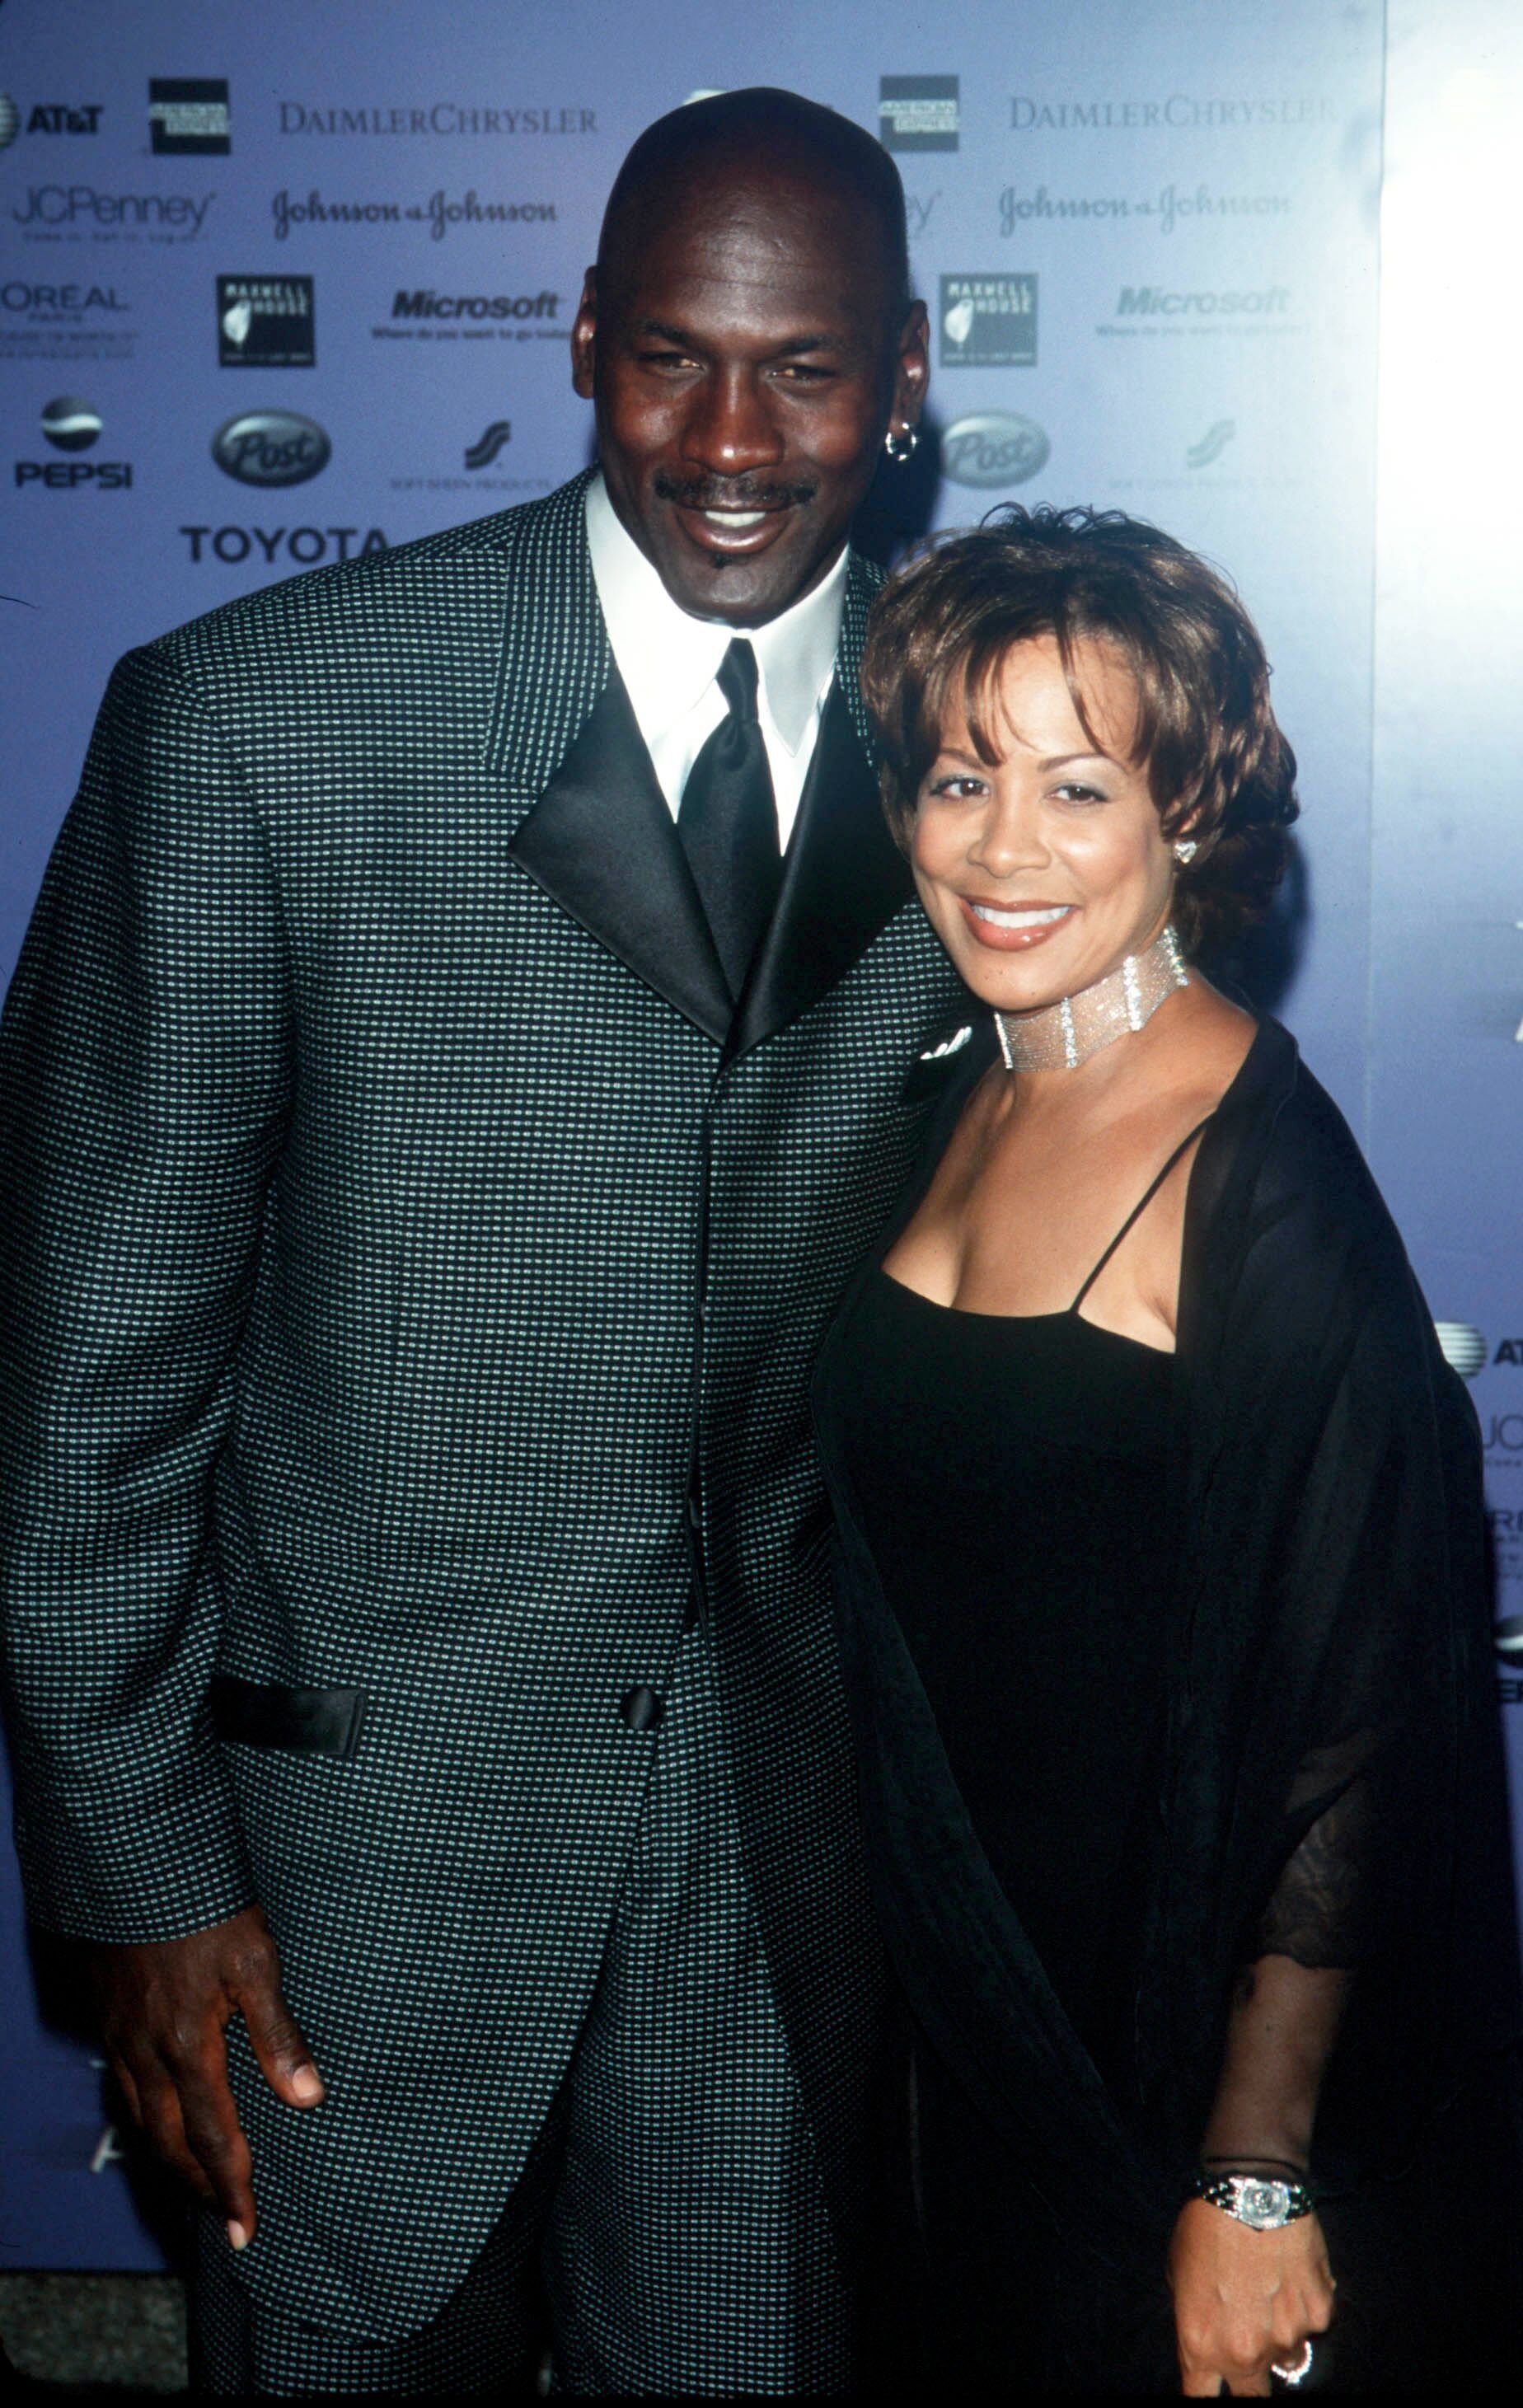 New York City Essence Awards 2000 avec Michael Jordan et sa femme Juanita. | Source : Getty Images